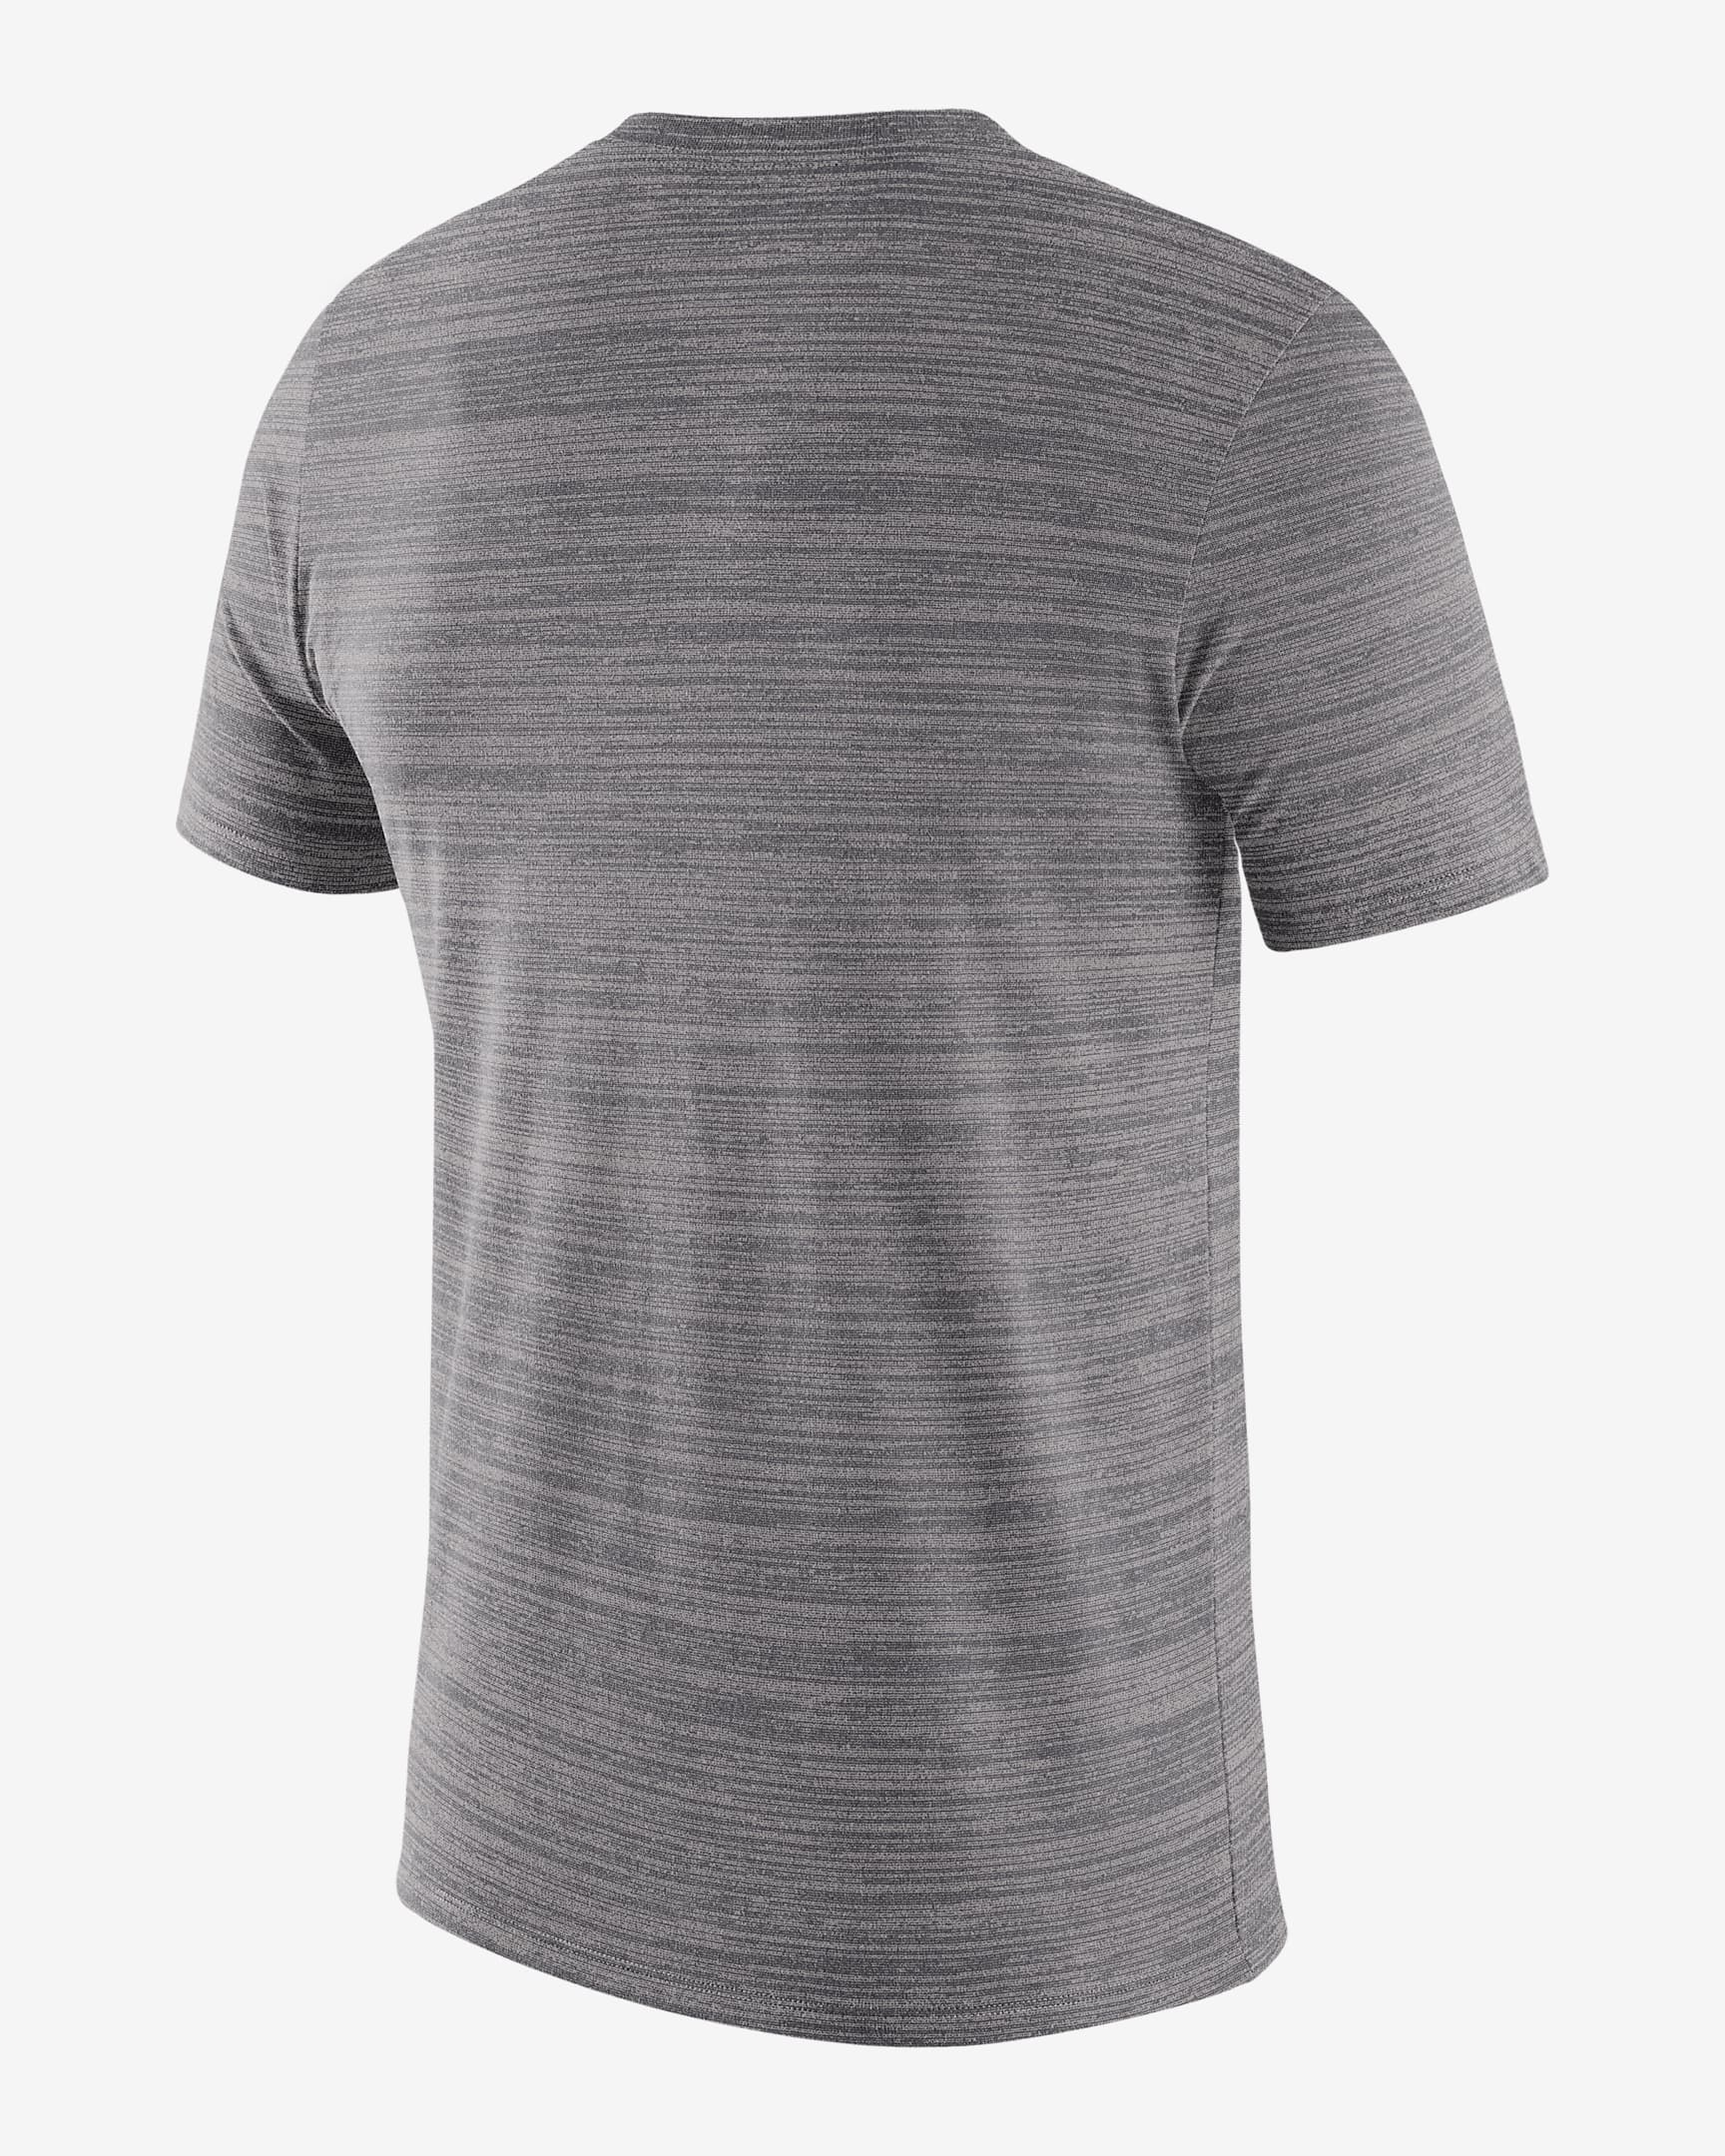 Nike College Dri-FIT Velocity (Clemson) Men's T-Shirt. Nike.com